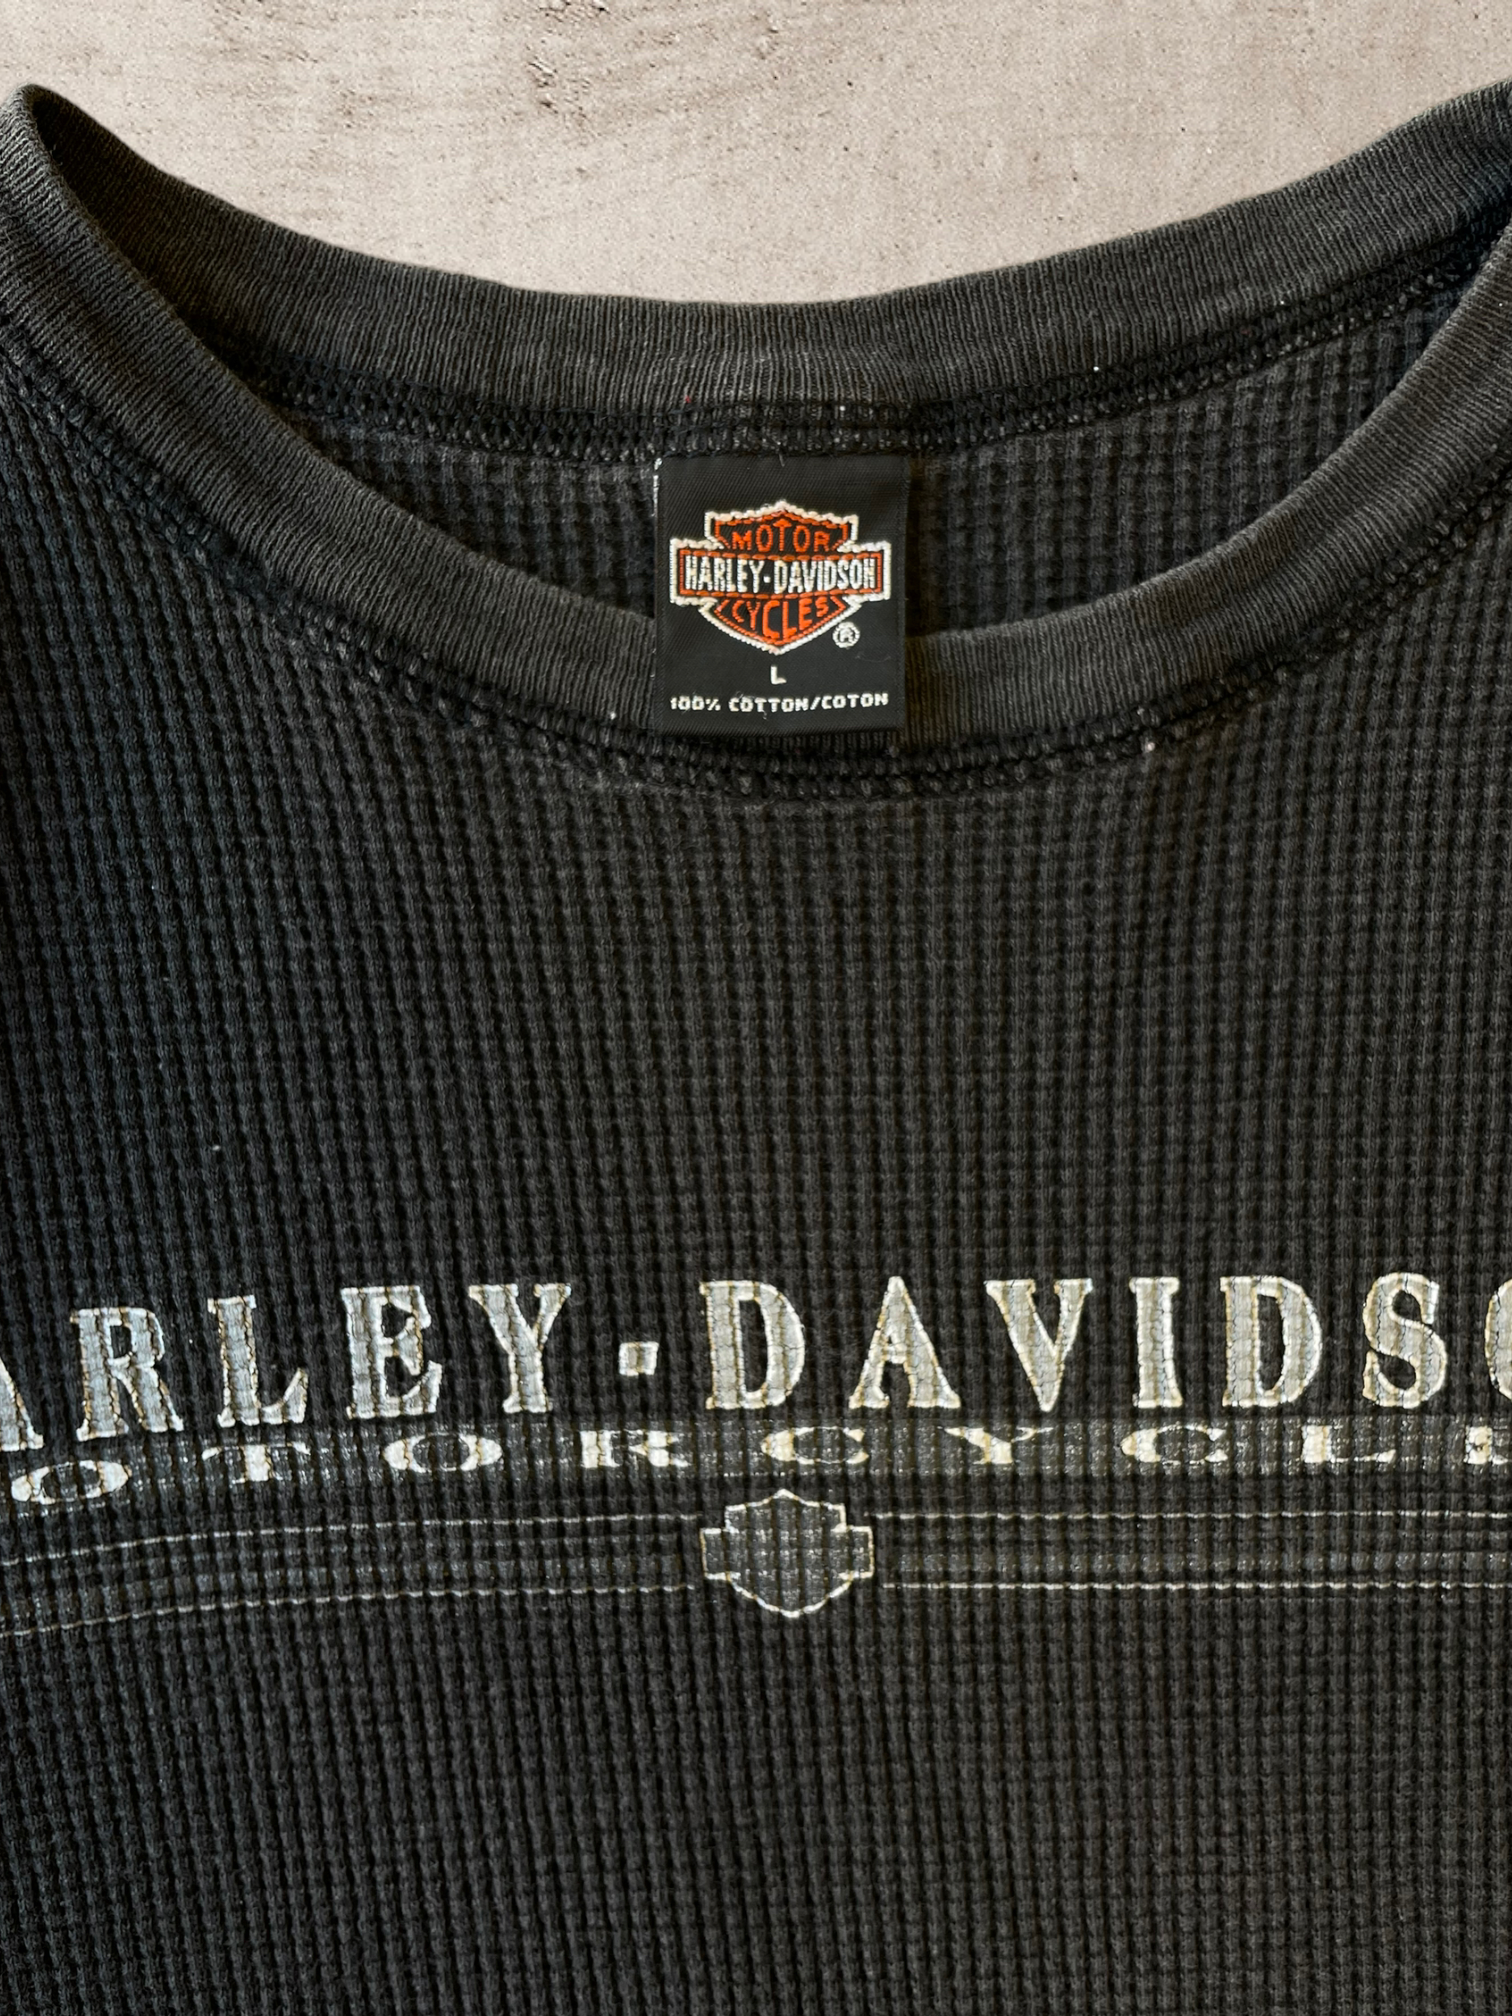 1998 Harley Davidson Thermal Long Sleeve T-Shirt - Large